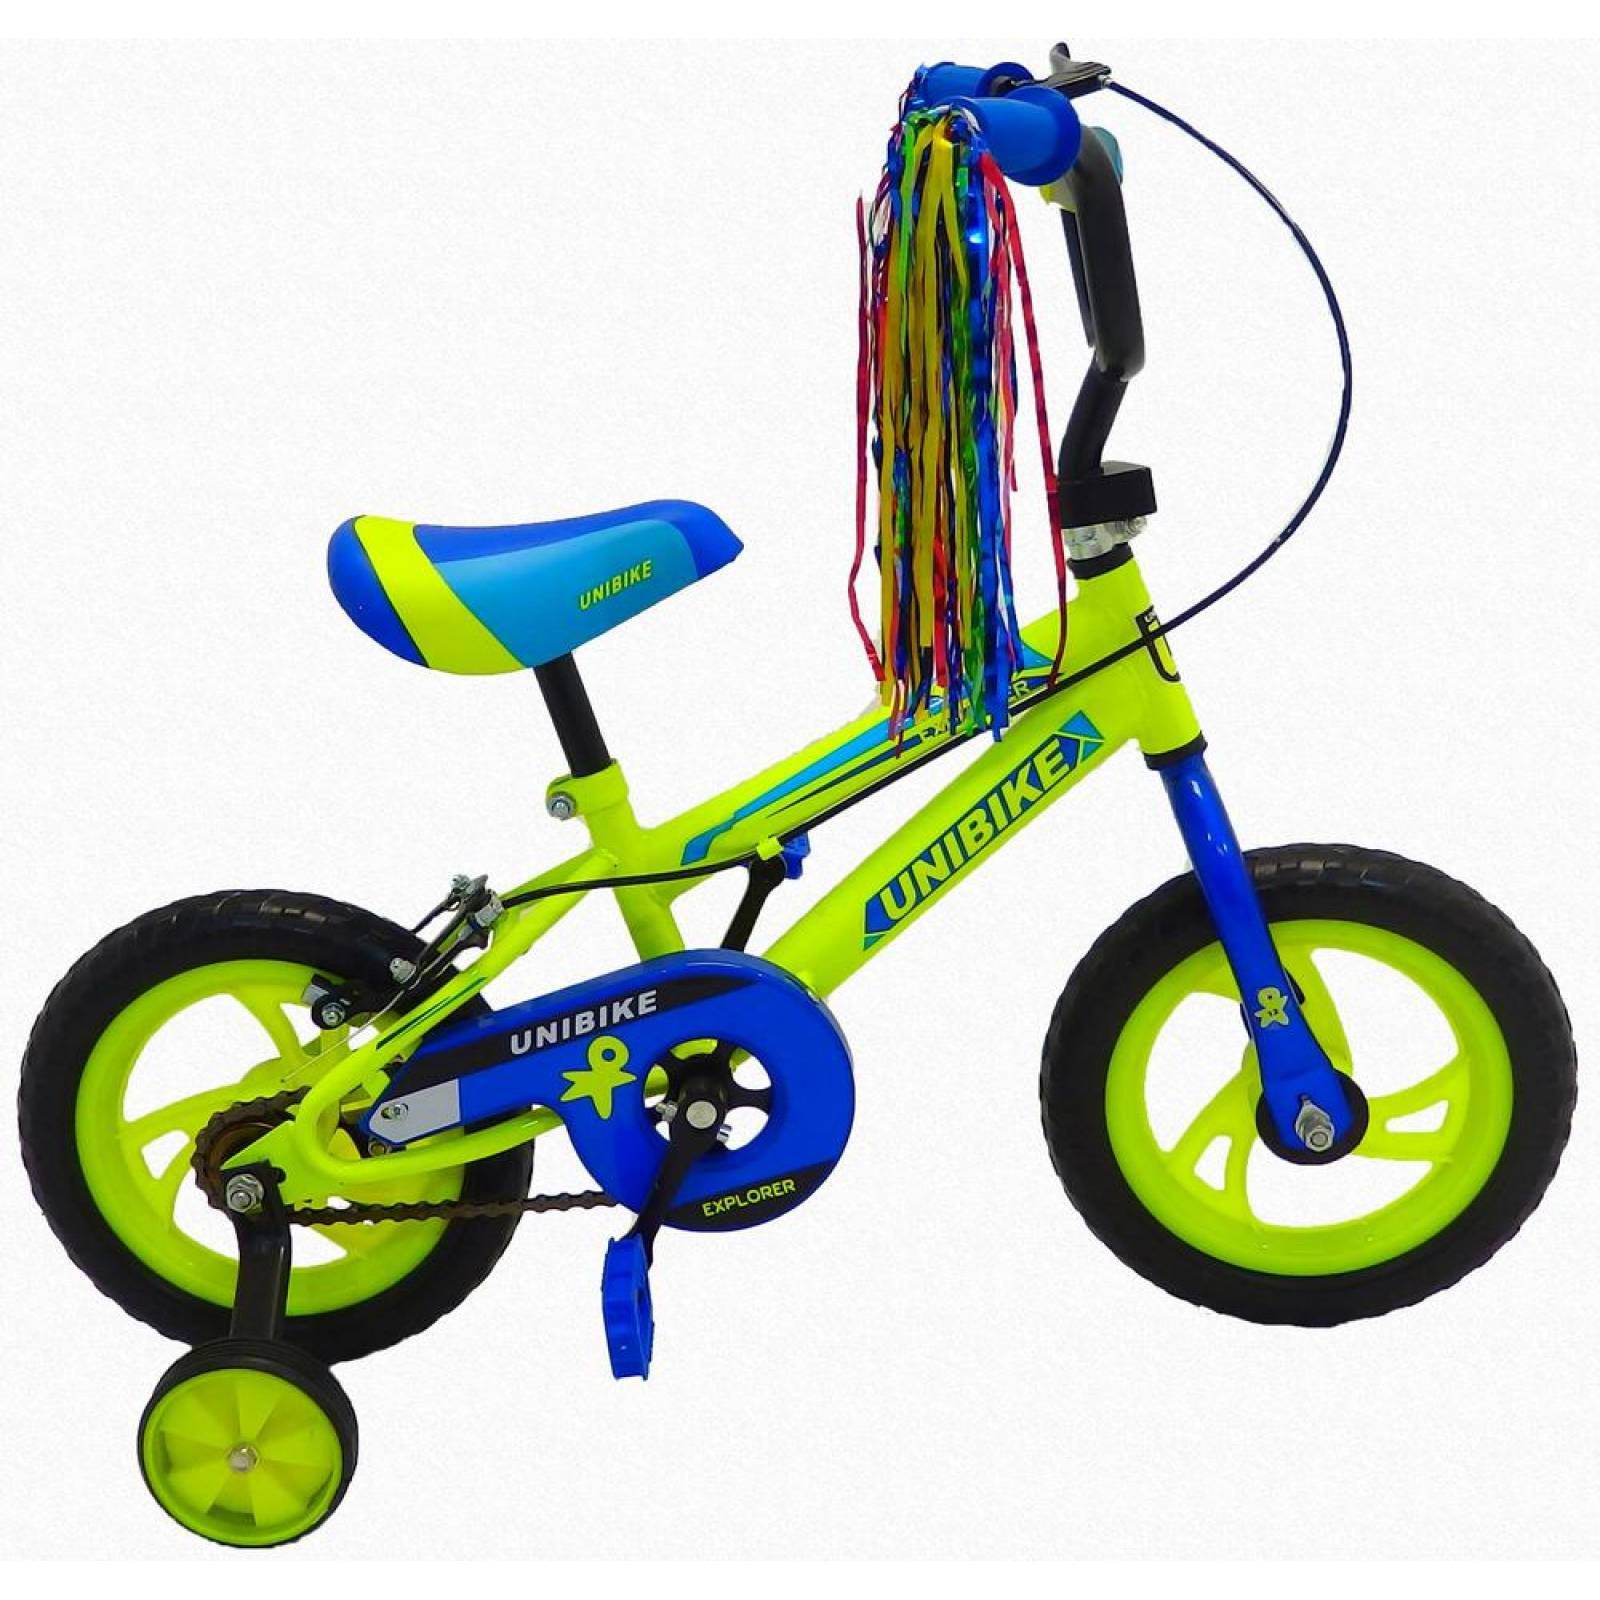 Bicicleta Infantil para niño Rodada 12 con llanta de goma Explor Amarillo